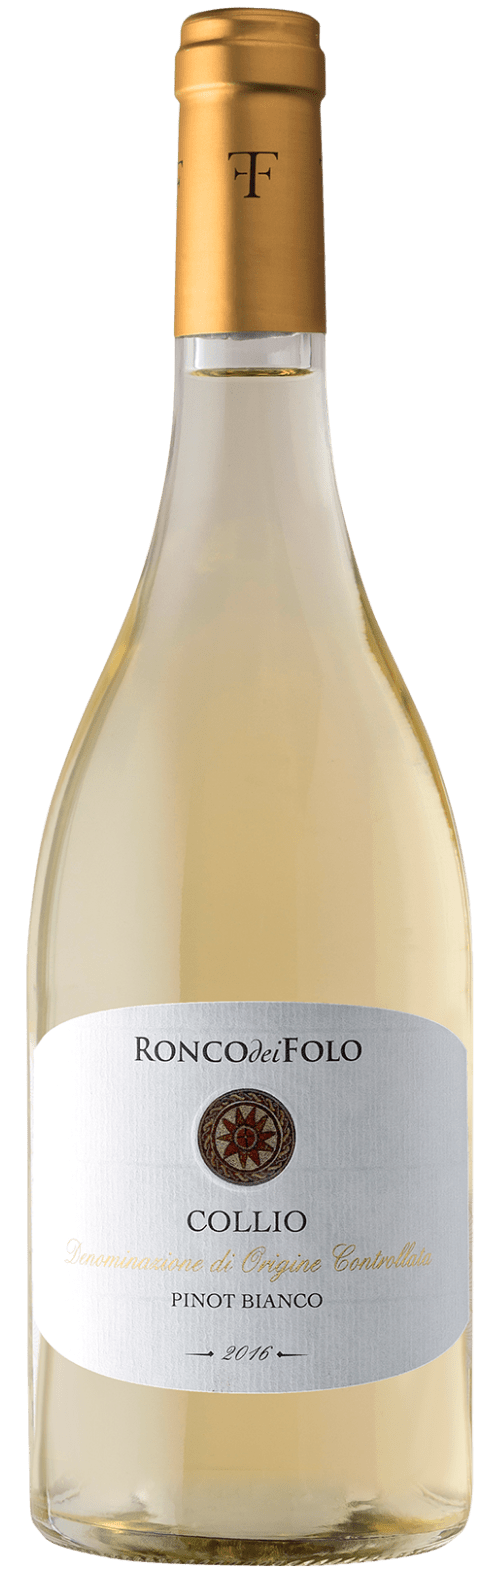 Pinot Bianco Collio D.O.C. Ronco dei Folo